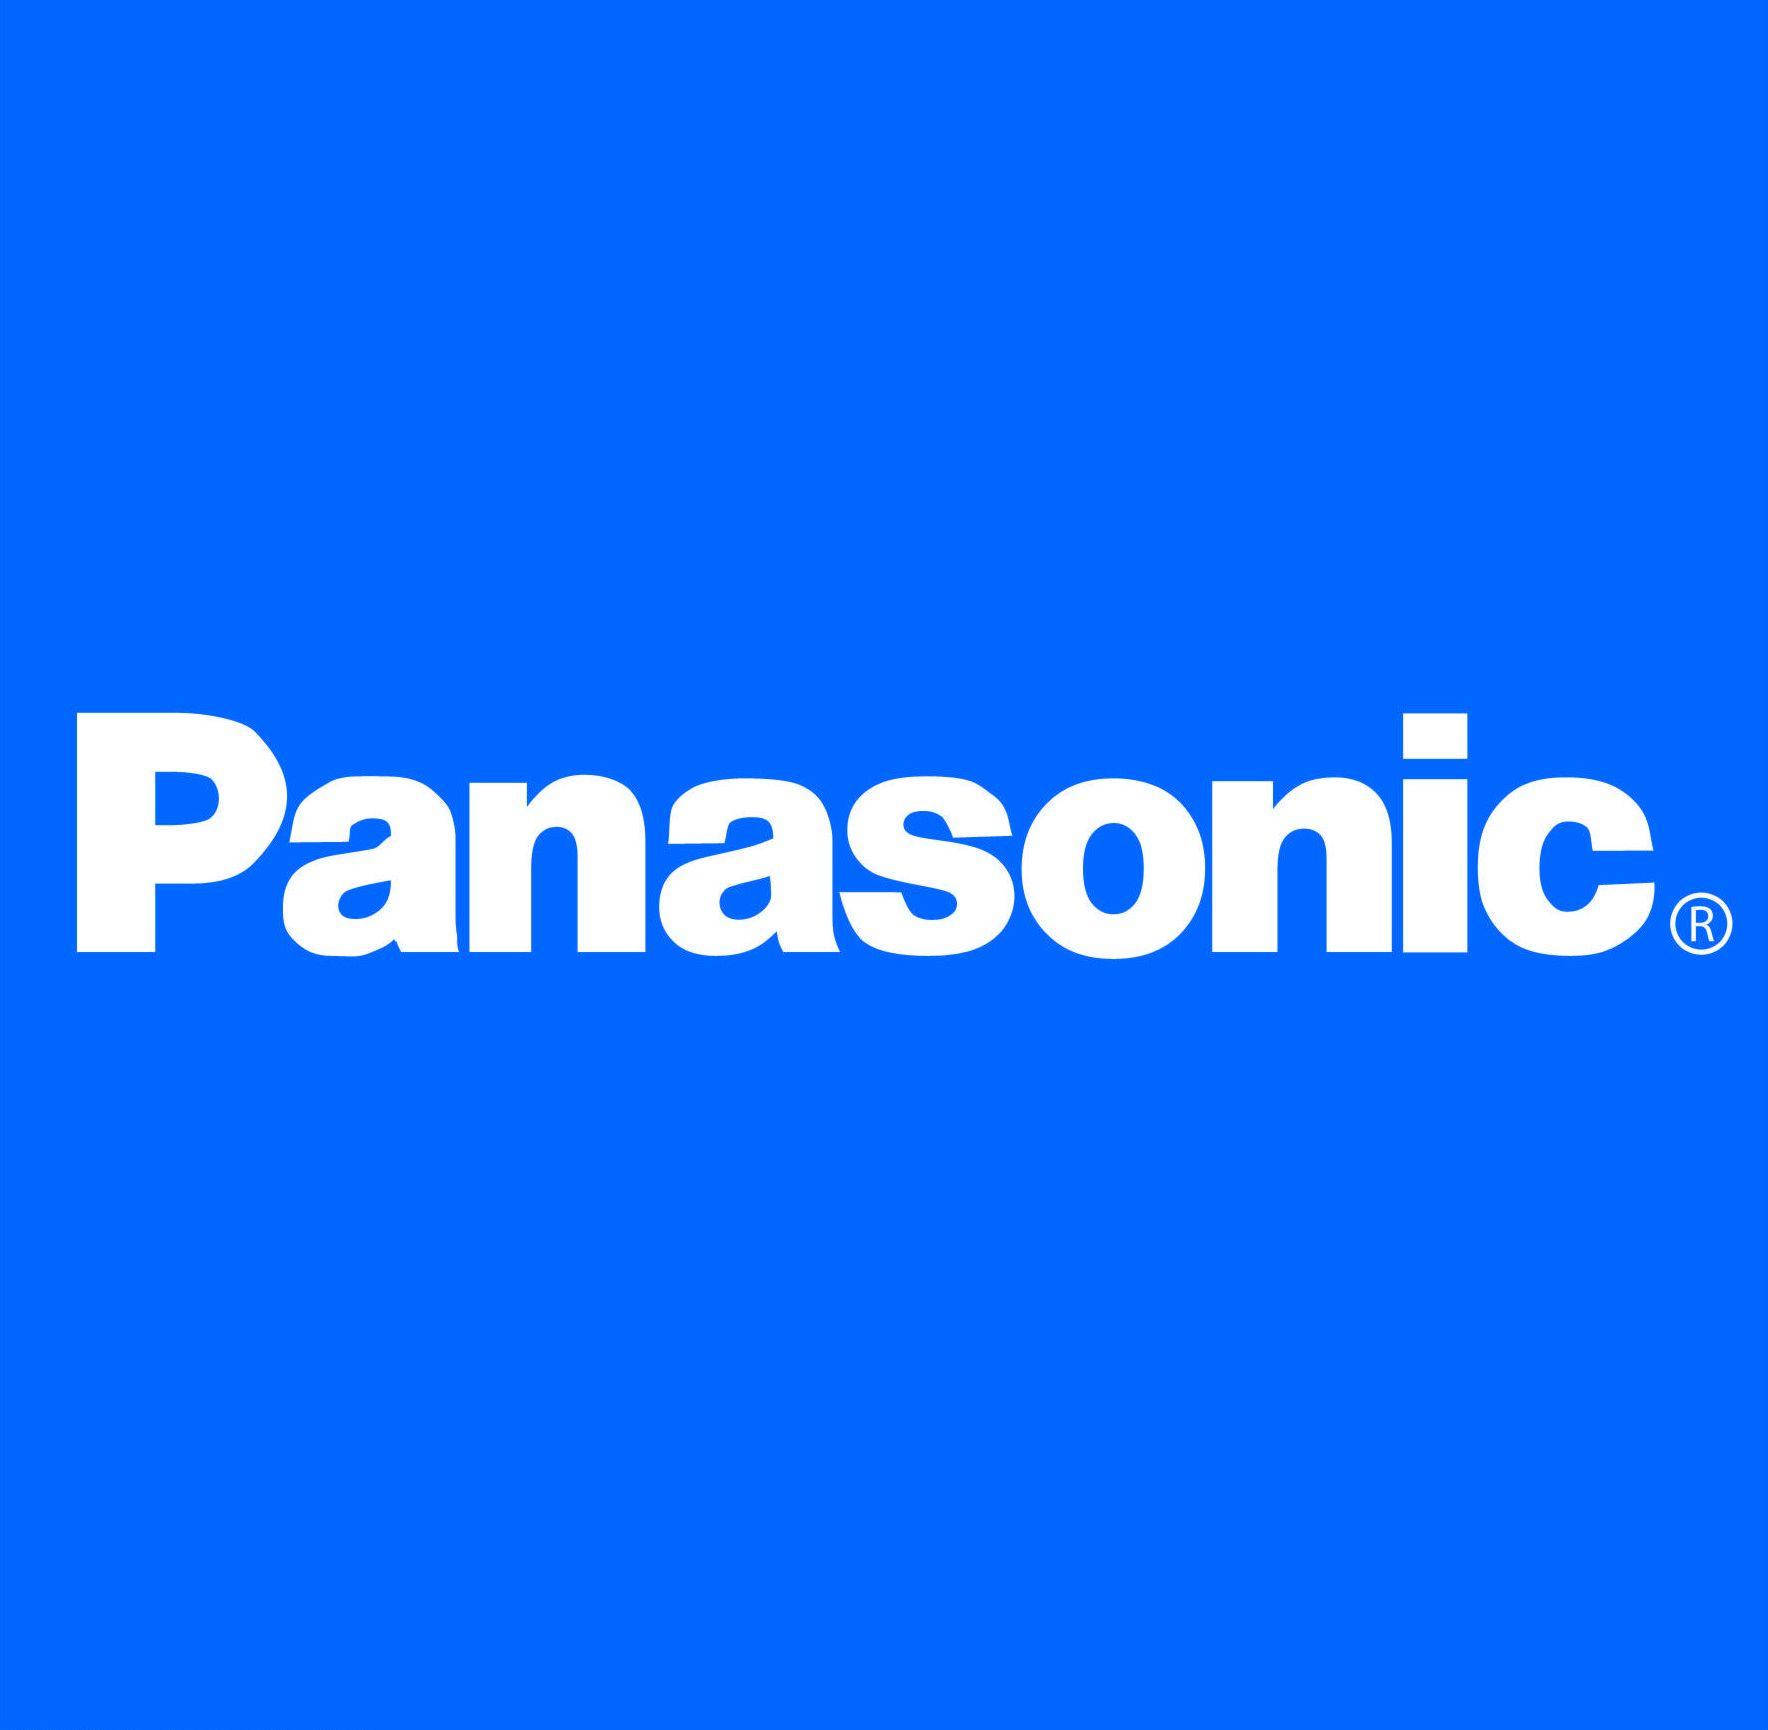 Panasonic Blue Background Wallpaper